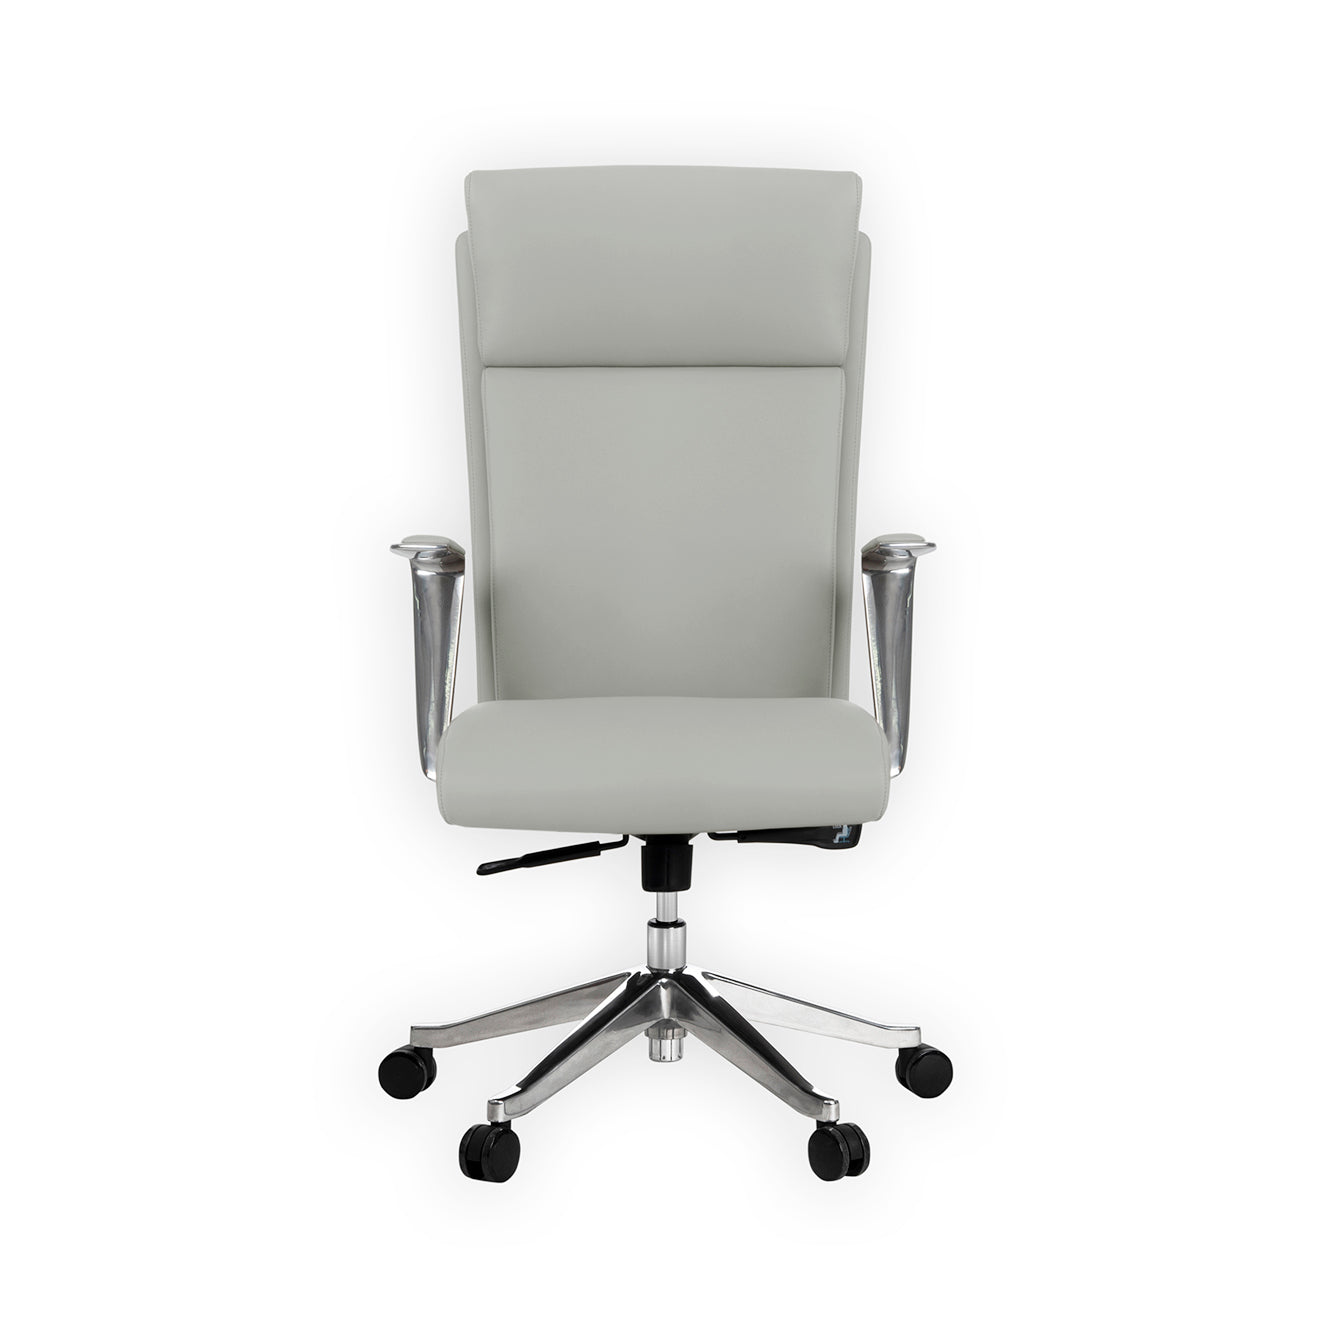 UJI Customer Chair - Light Grey